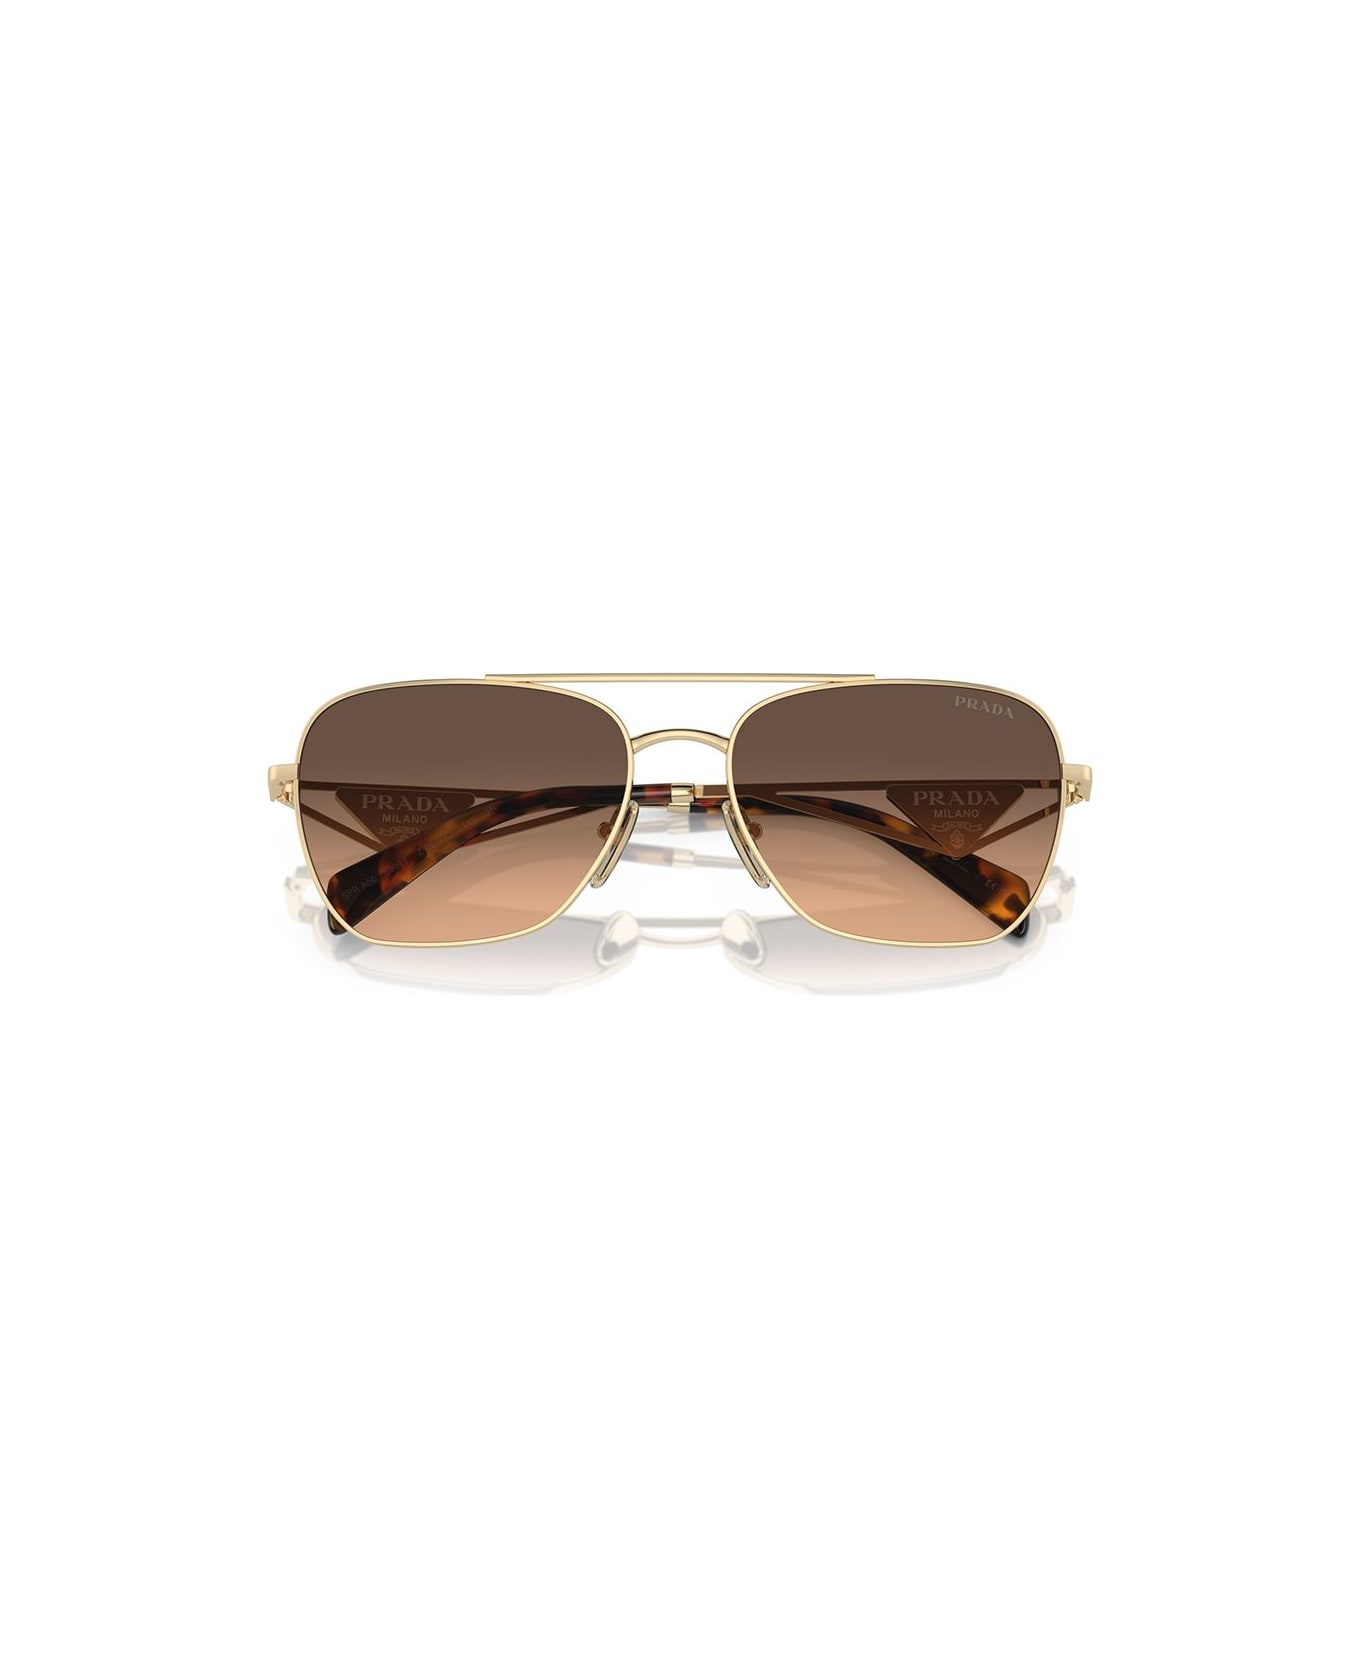 Prada Eyewear Sunglasses - ZVN50C